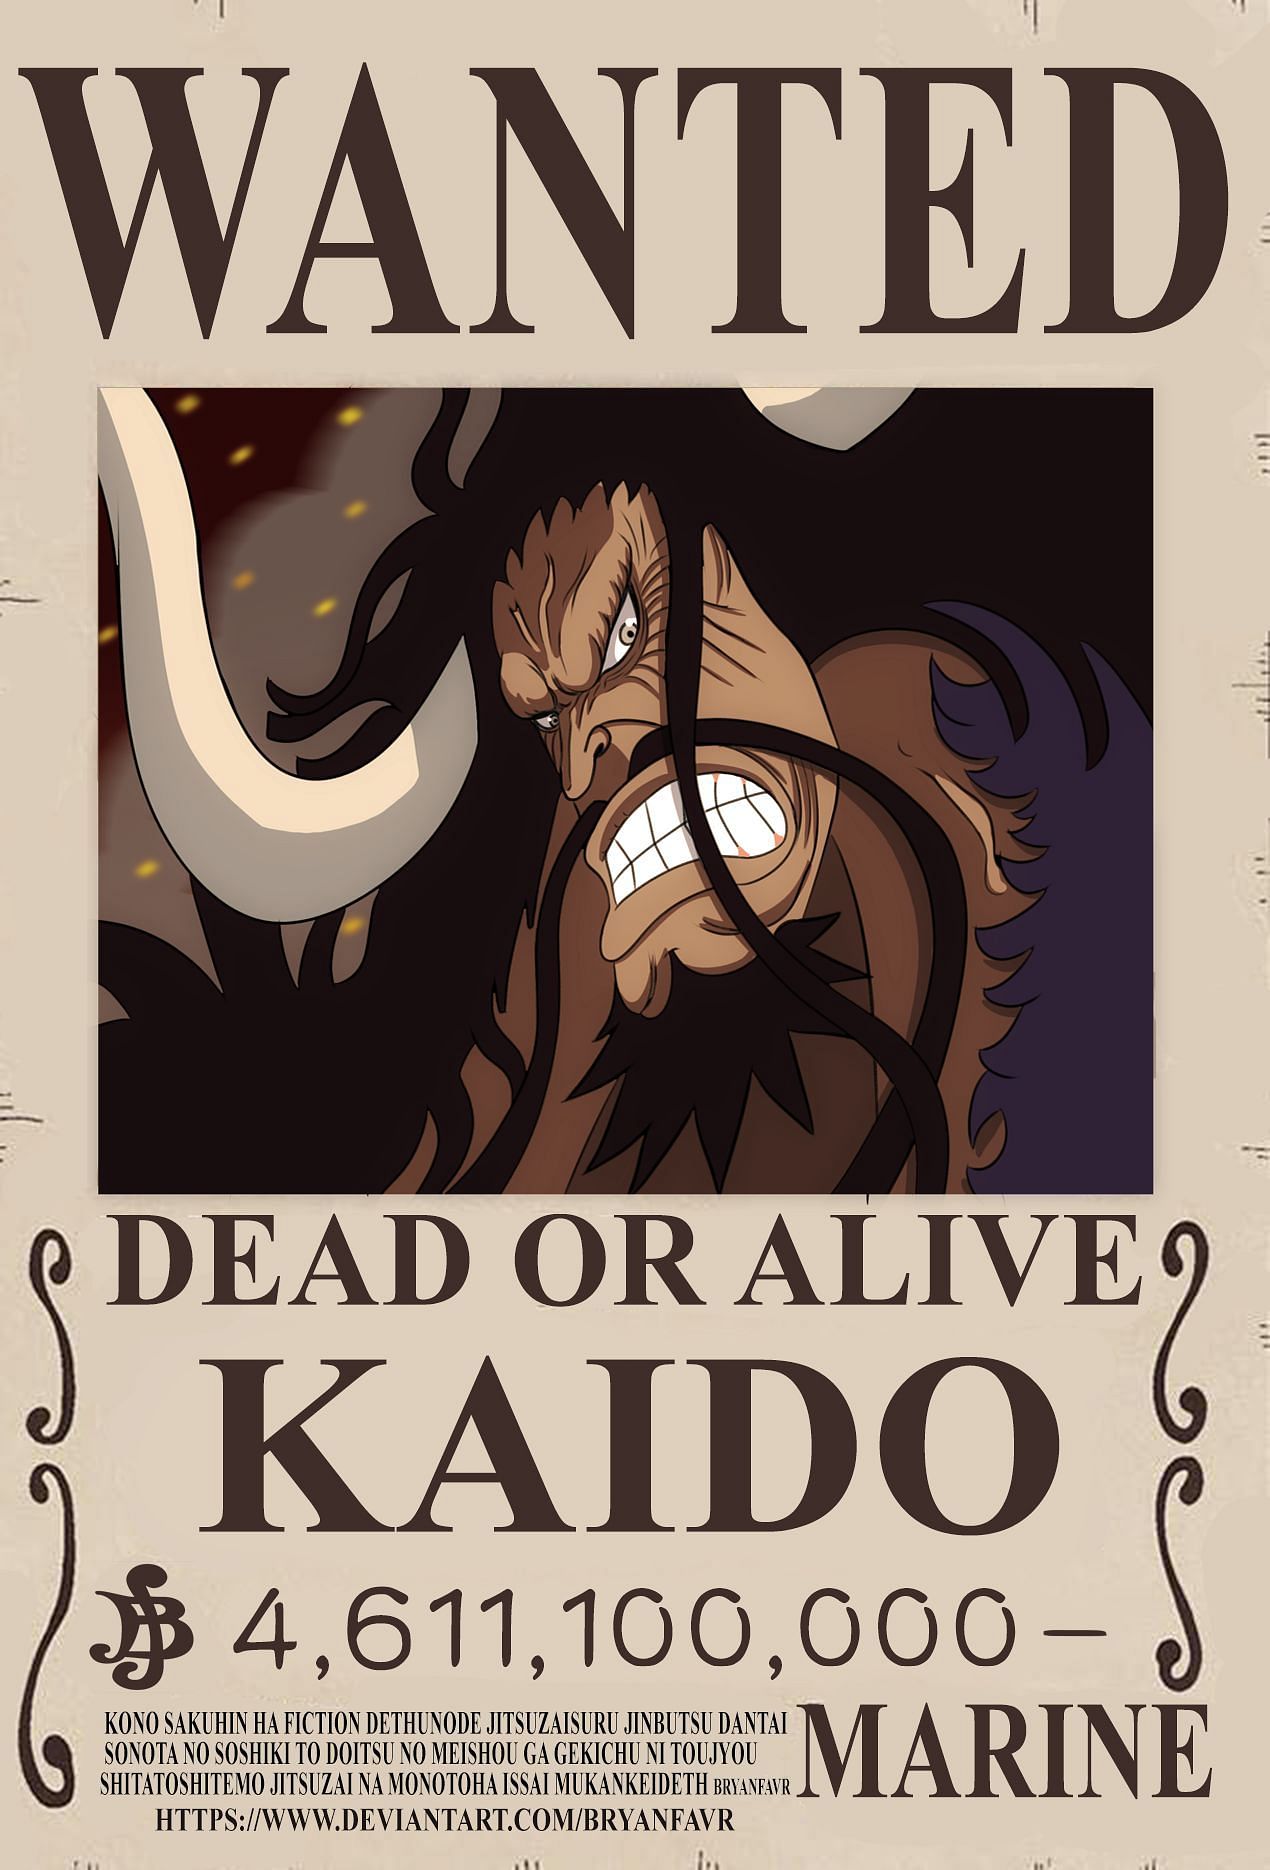 Kaido wanted poster (Image via bryanfavr, DeviantArt)